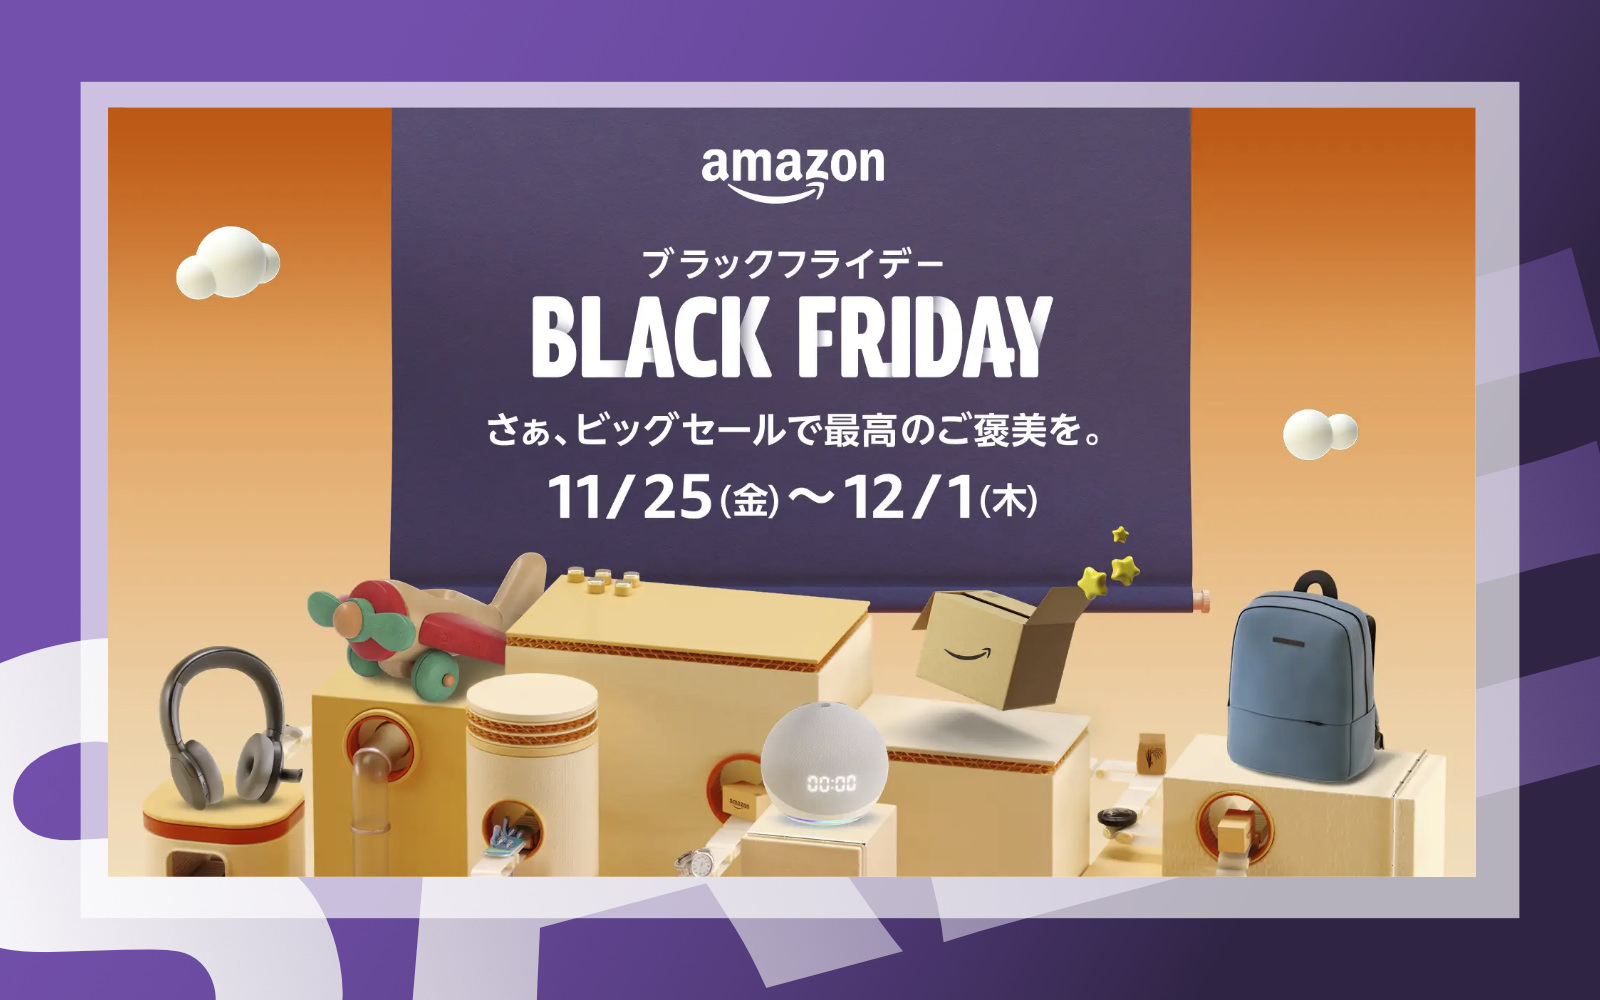 Amazon Black Friday 2022 sale items 2